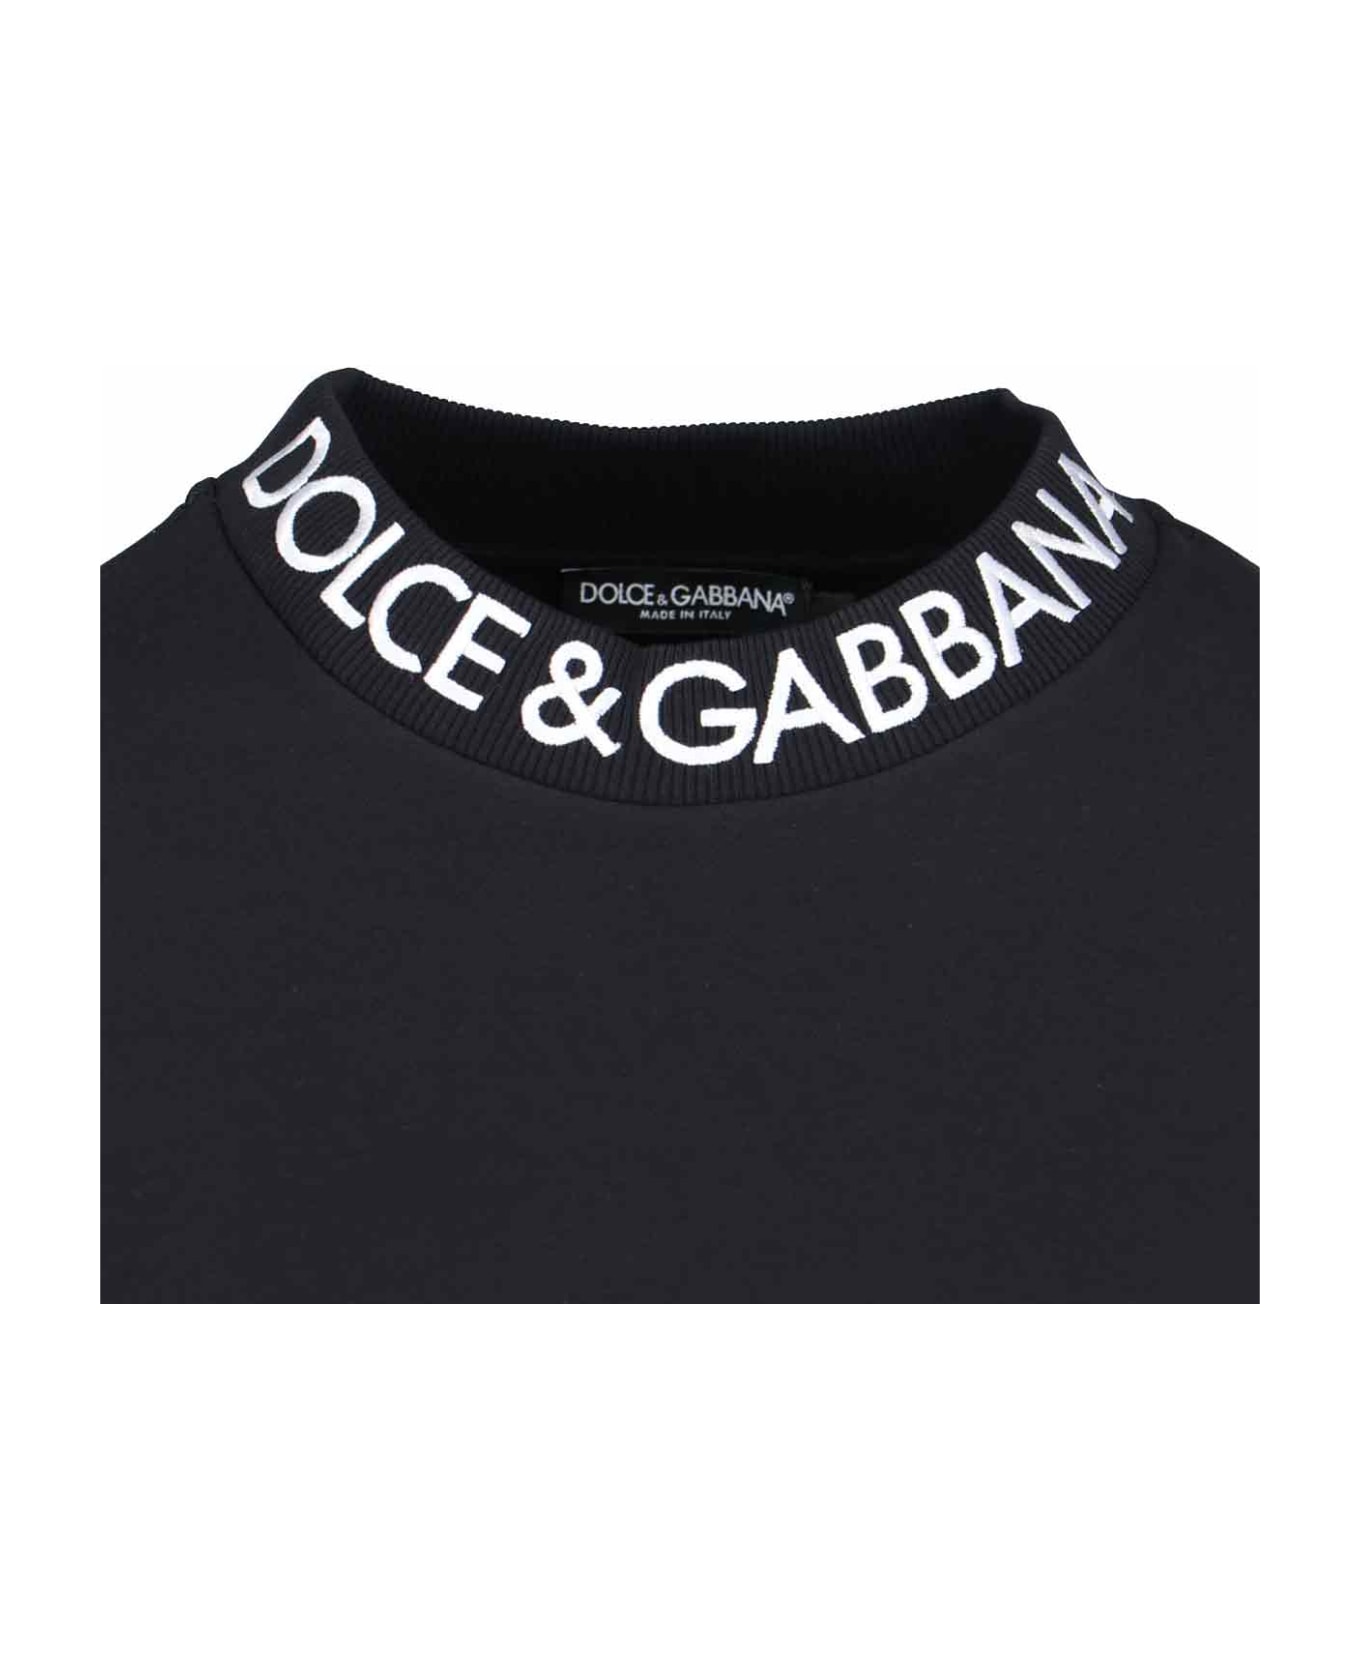 Dolce & Gabbana Cropped Crew Neck Sweatshirt - Black  